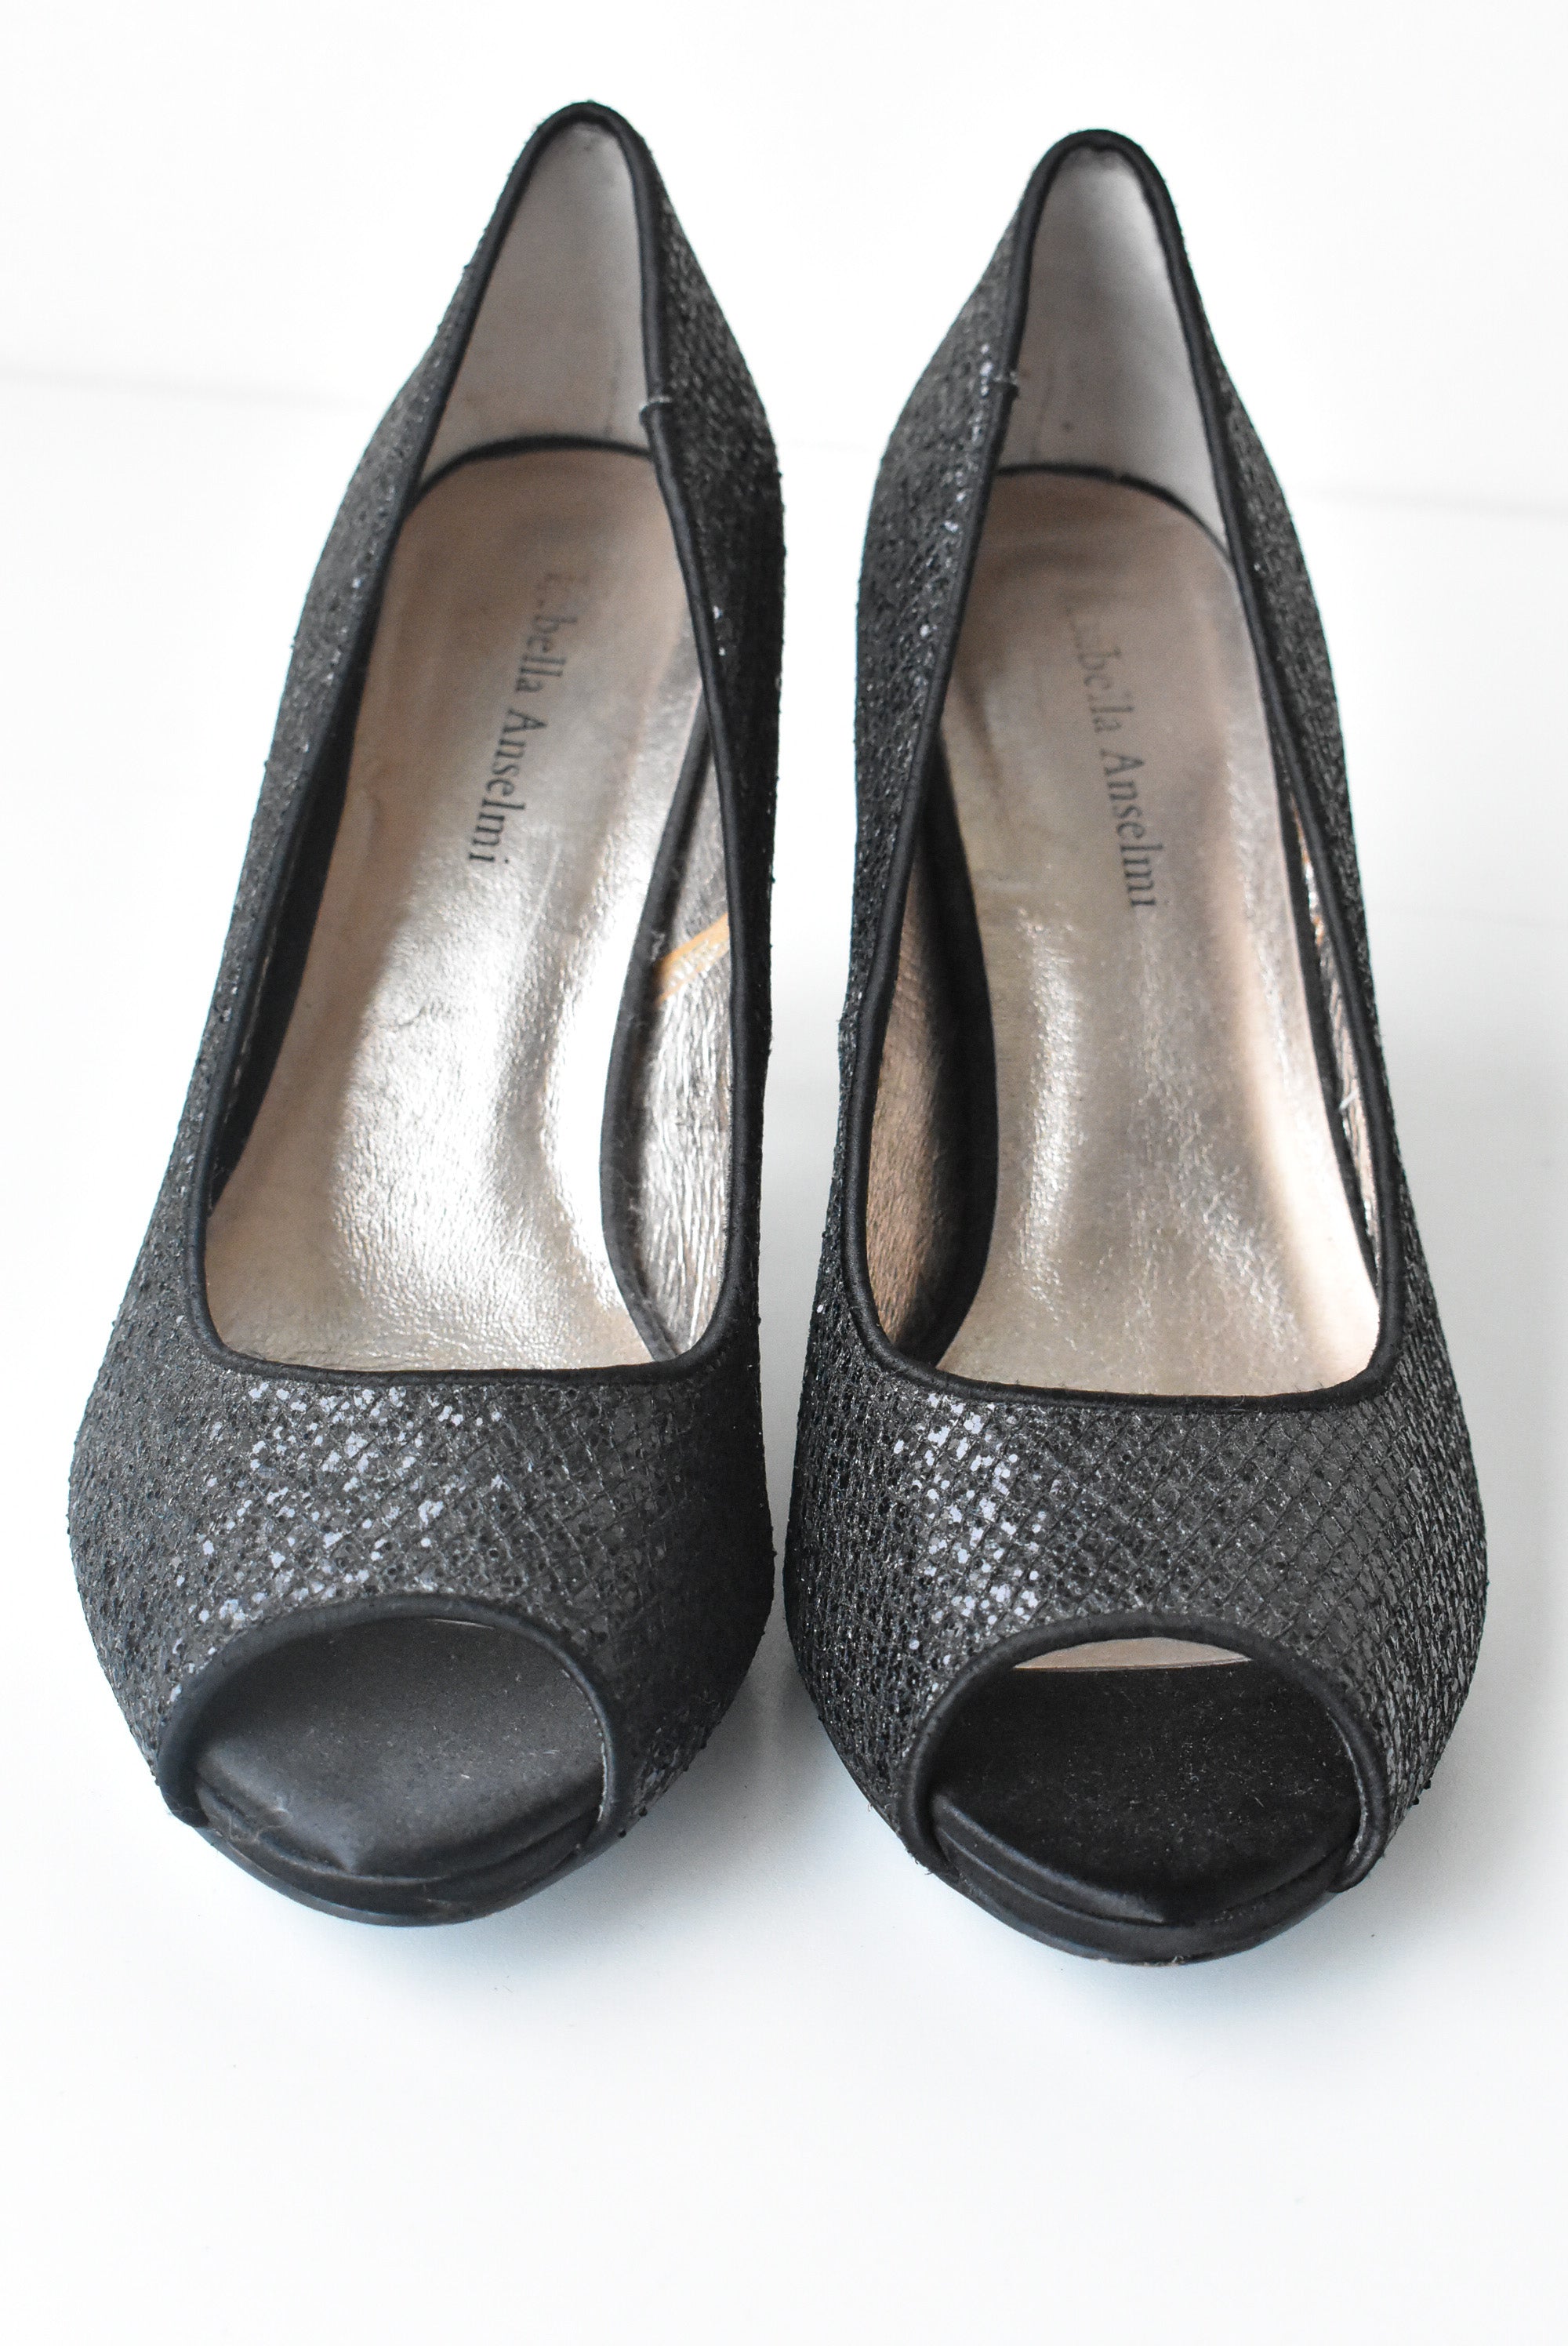 Black sequin heel pumps from Statale - KeeShoes